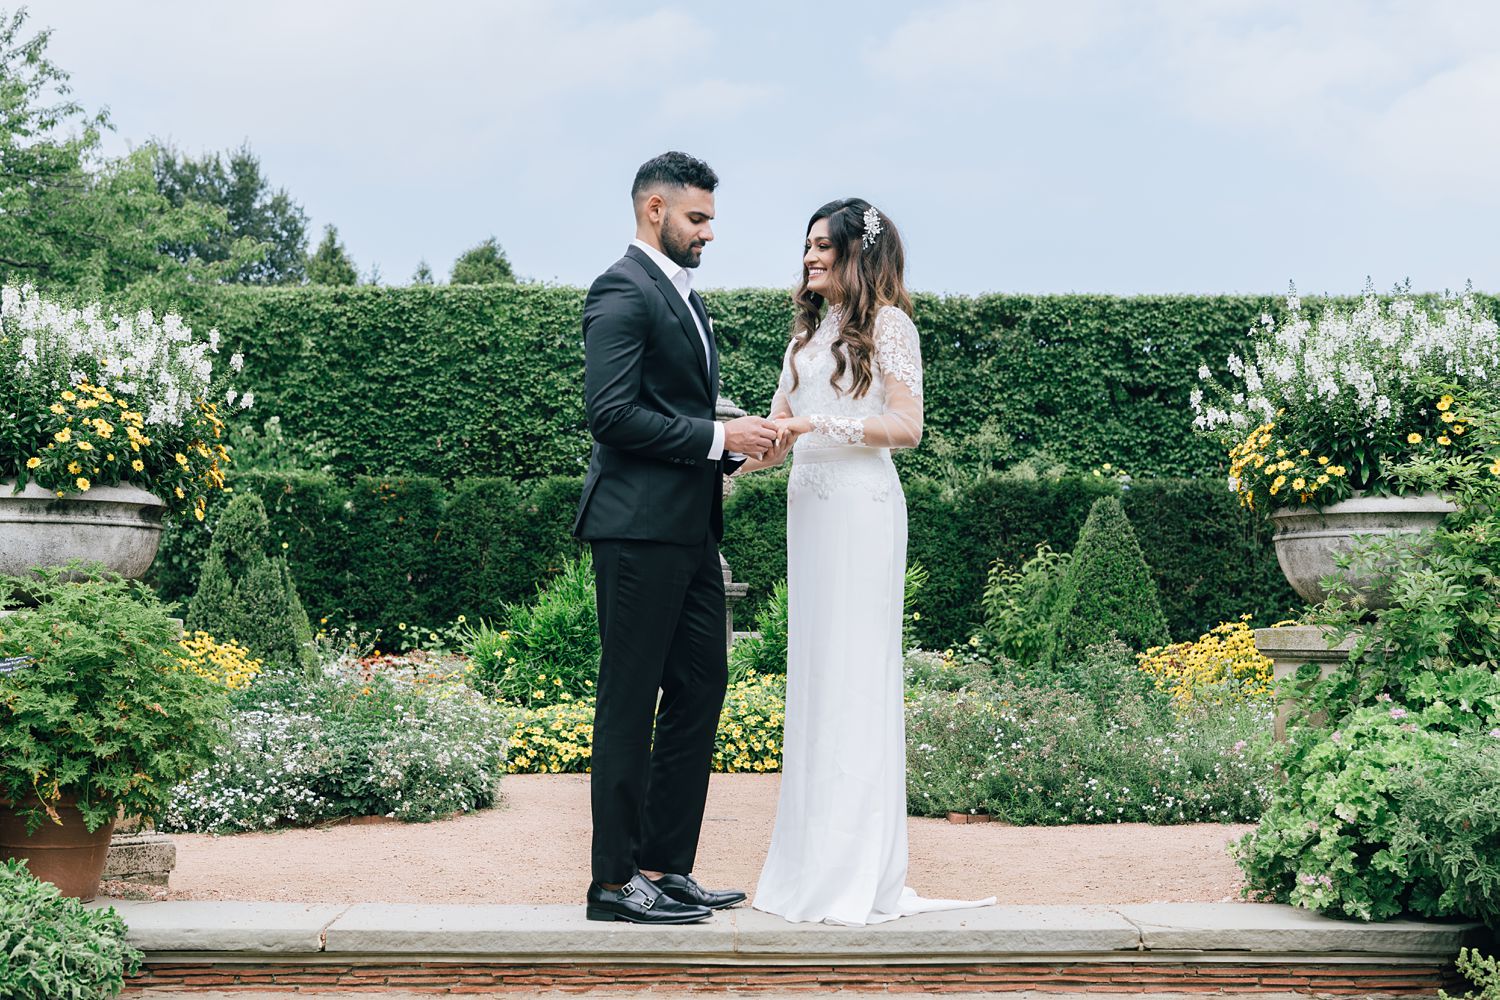 Wedding couple exchanging rings at Chicago Botanic Garden in the Walled English Garden